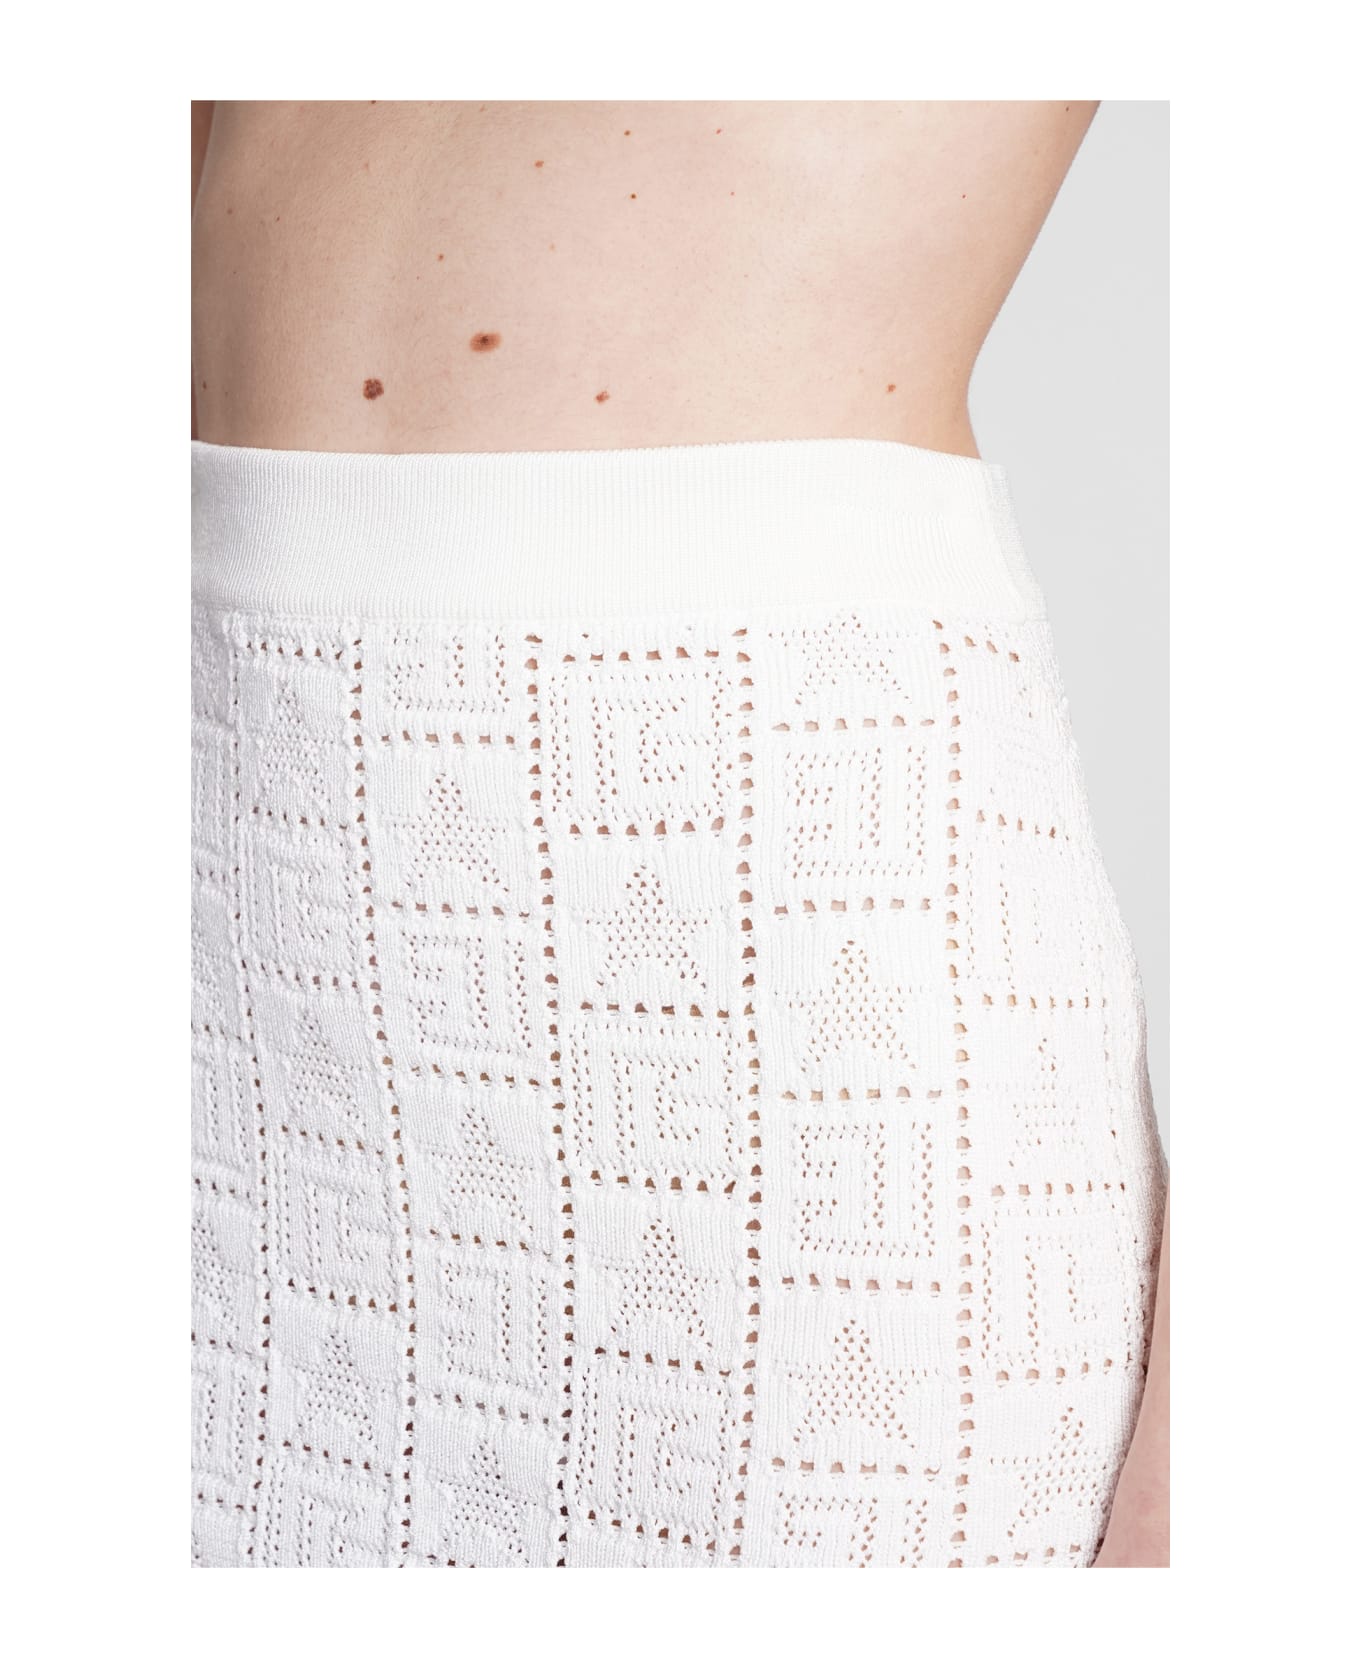 Balmain Skirt - White